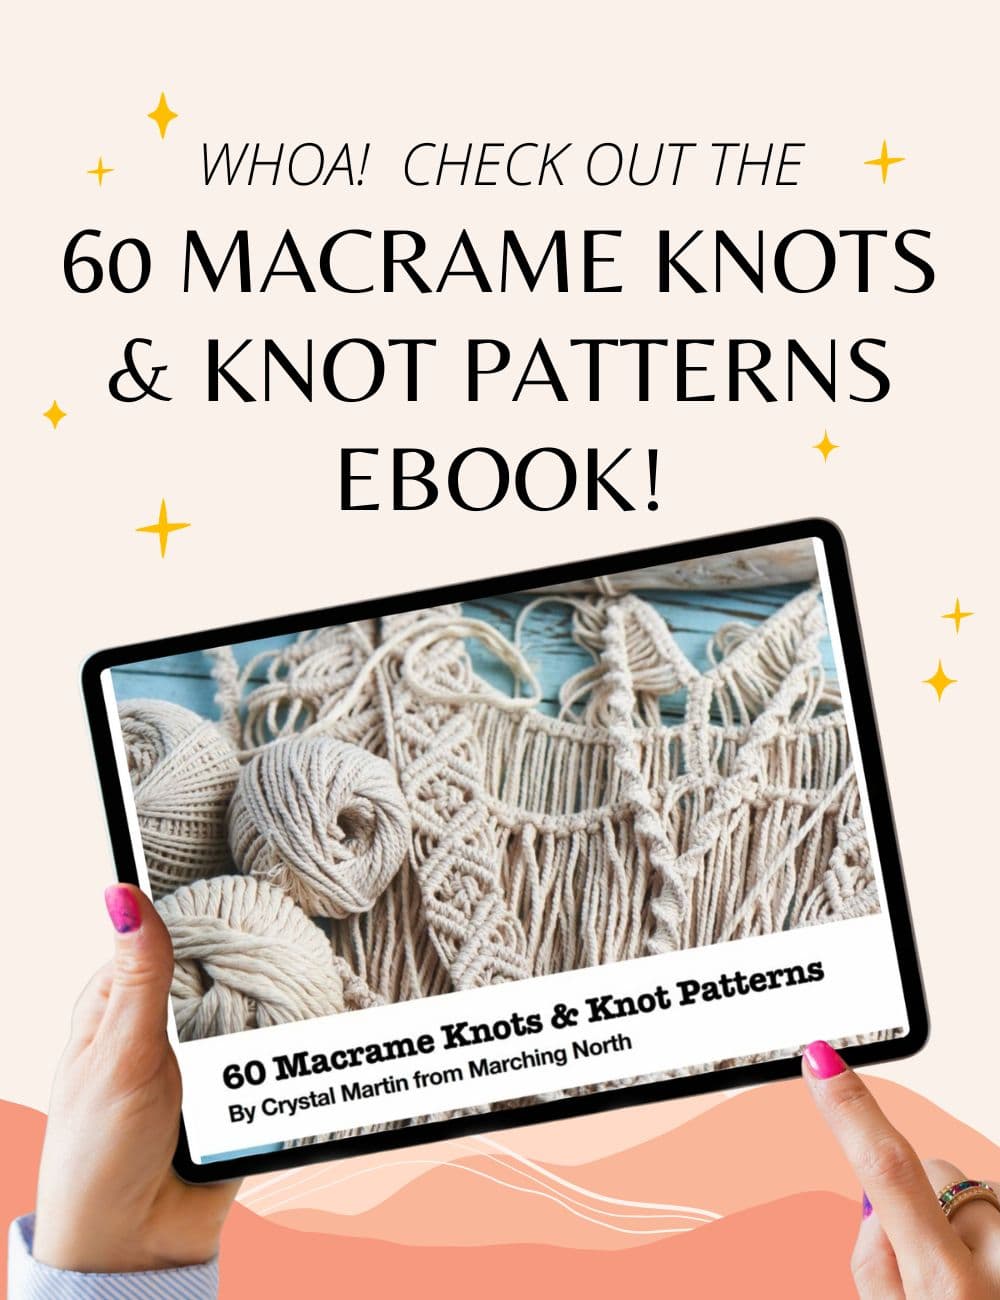 60 Macrame Knots ebook promo image